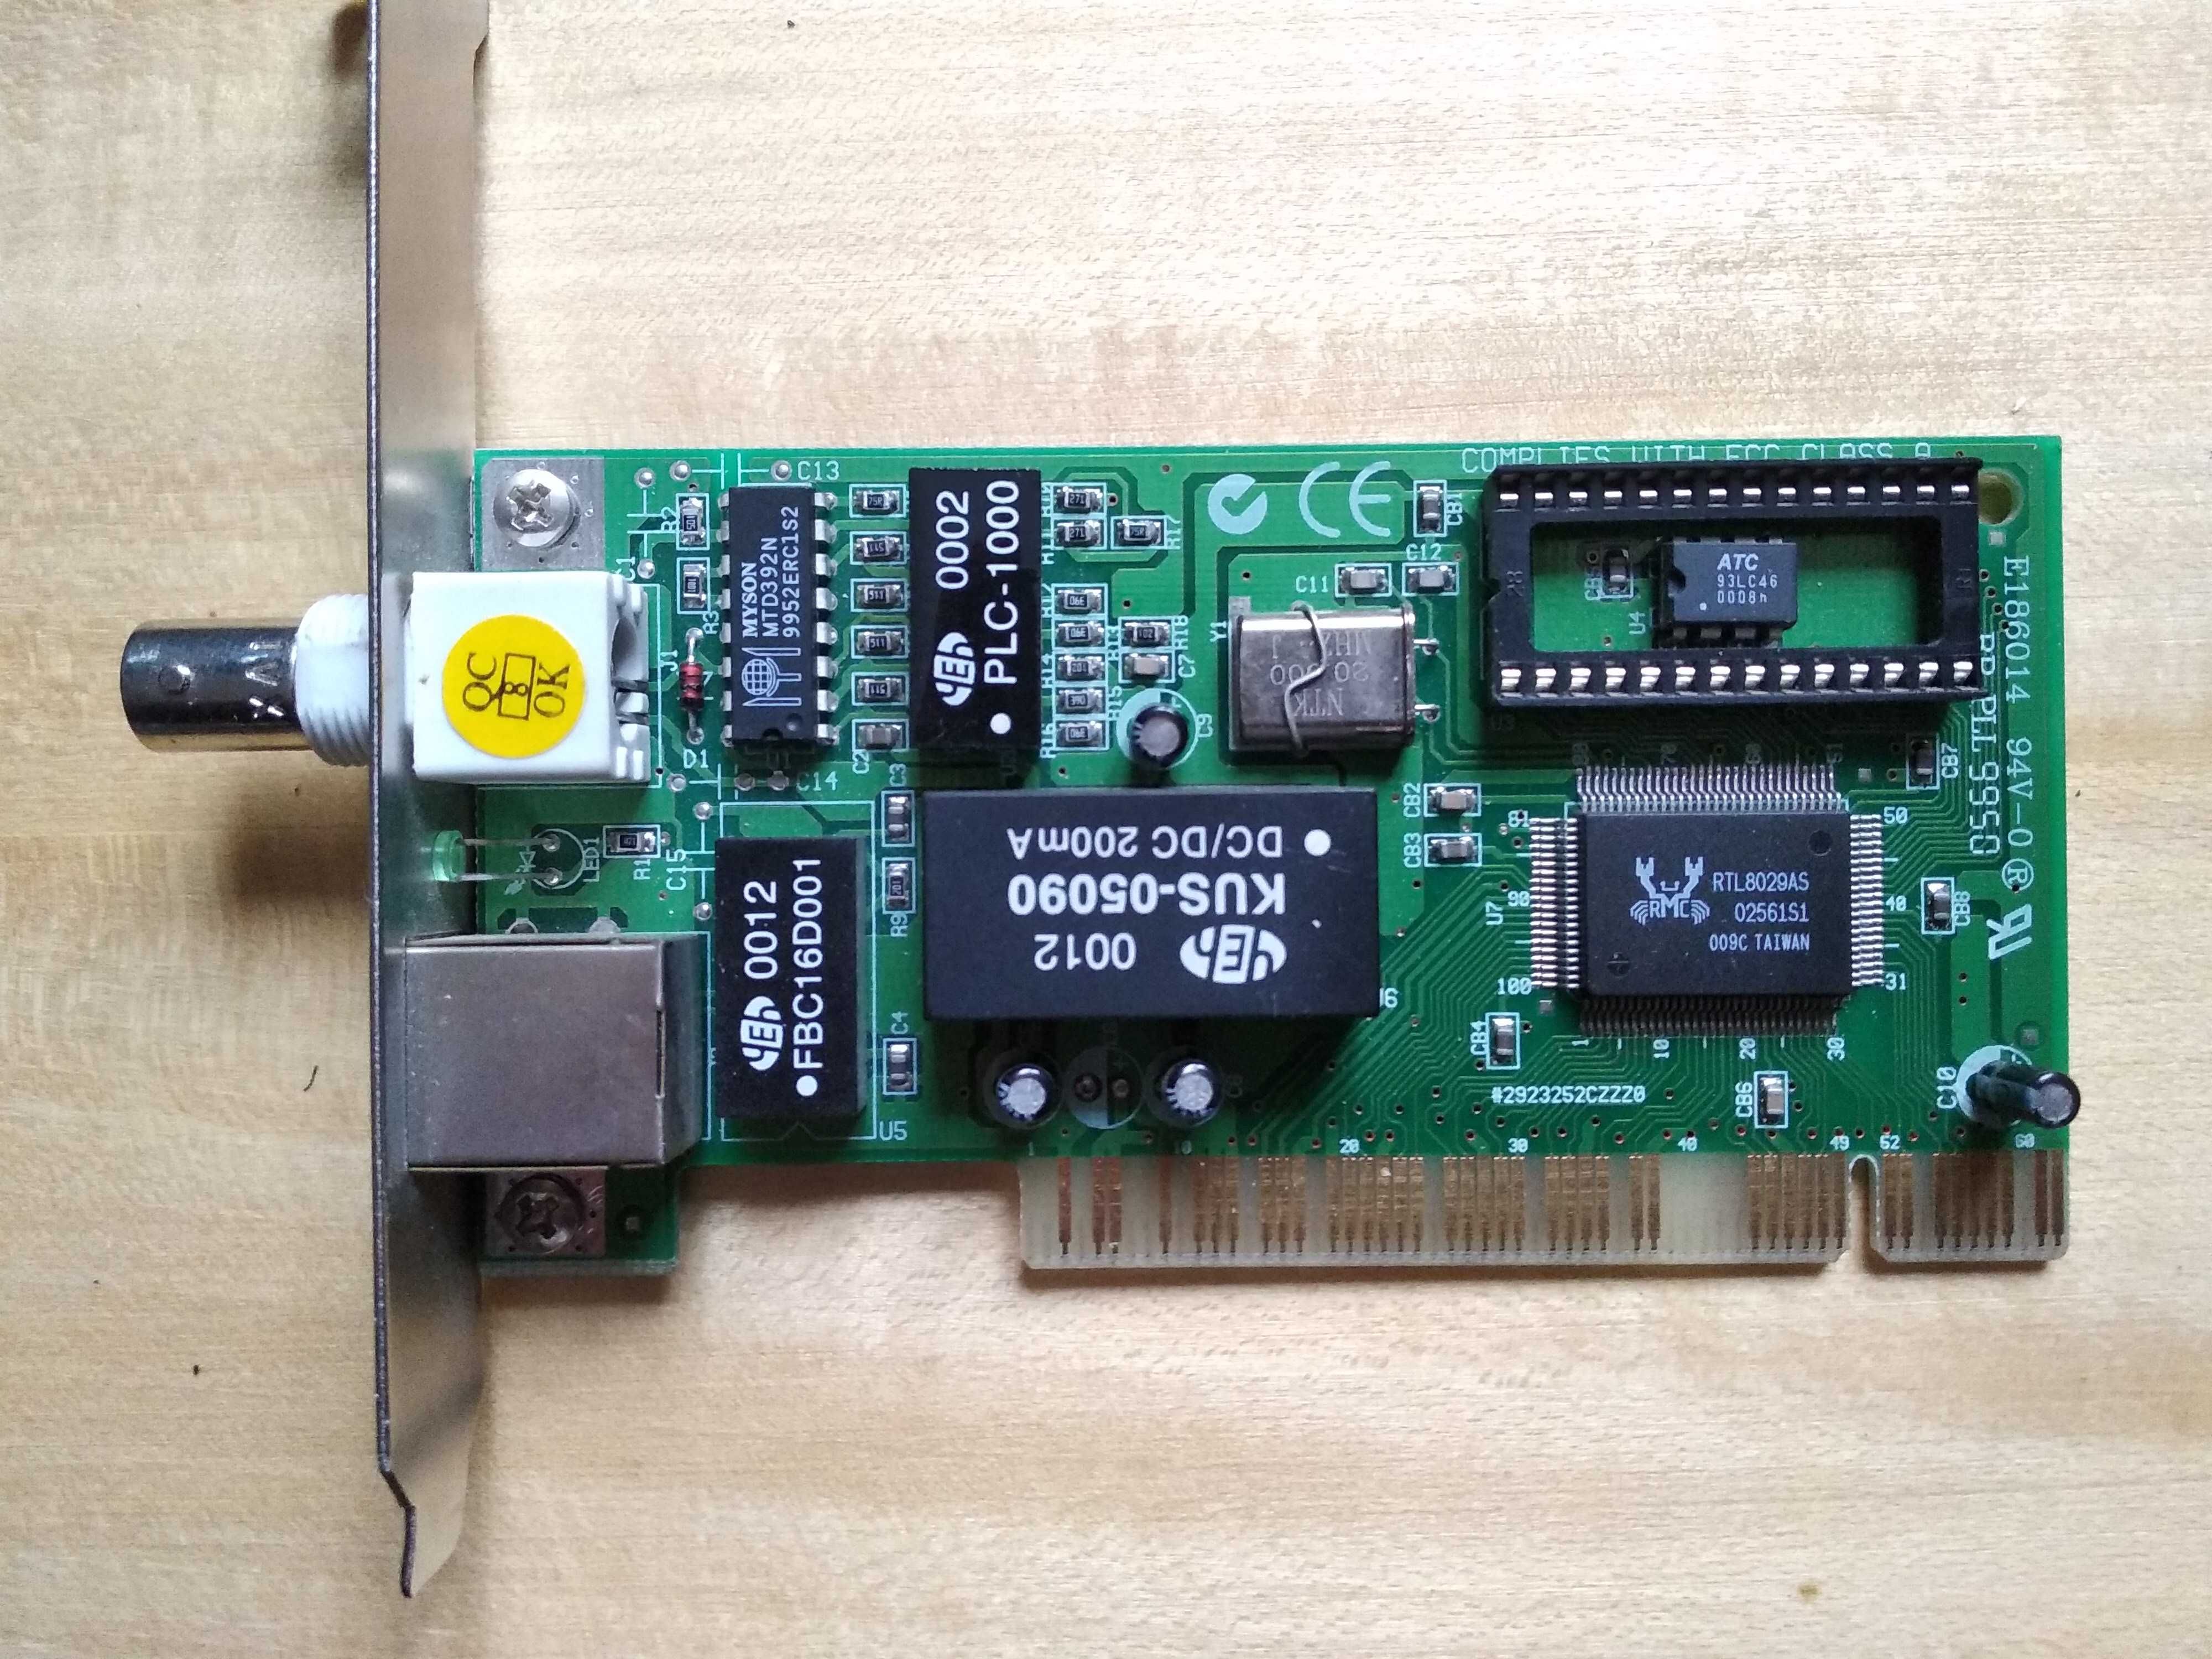 PCI сетевая карта Surecom и модем Conexant цена за все